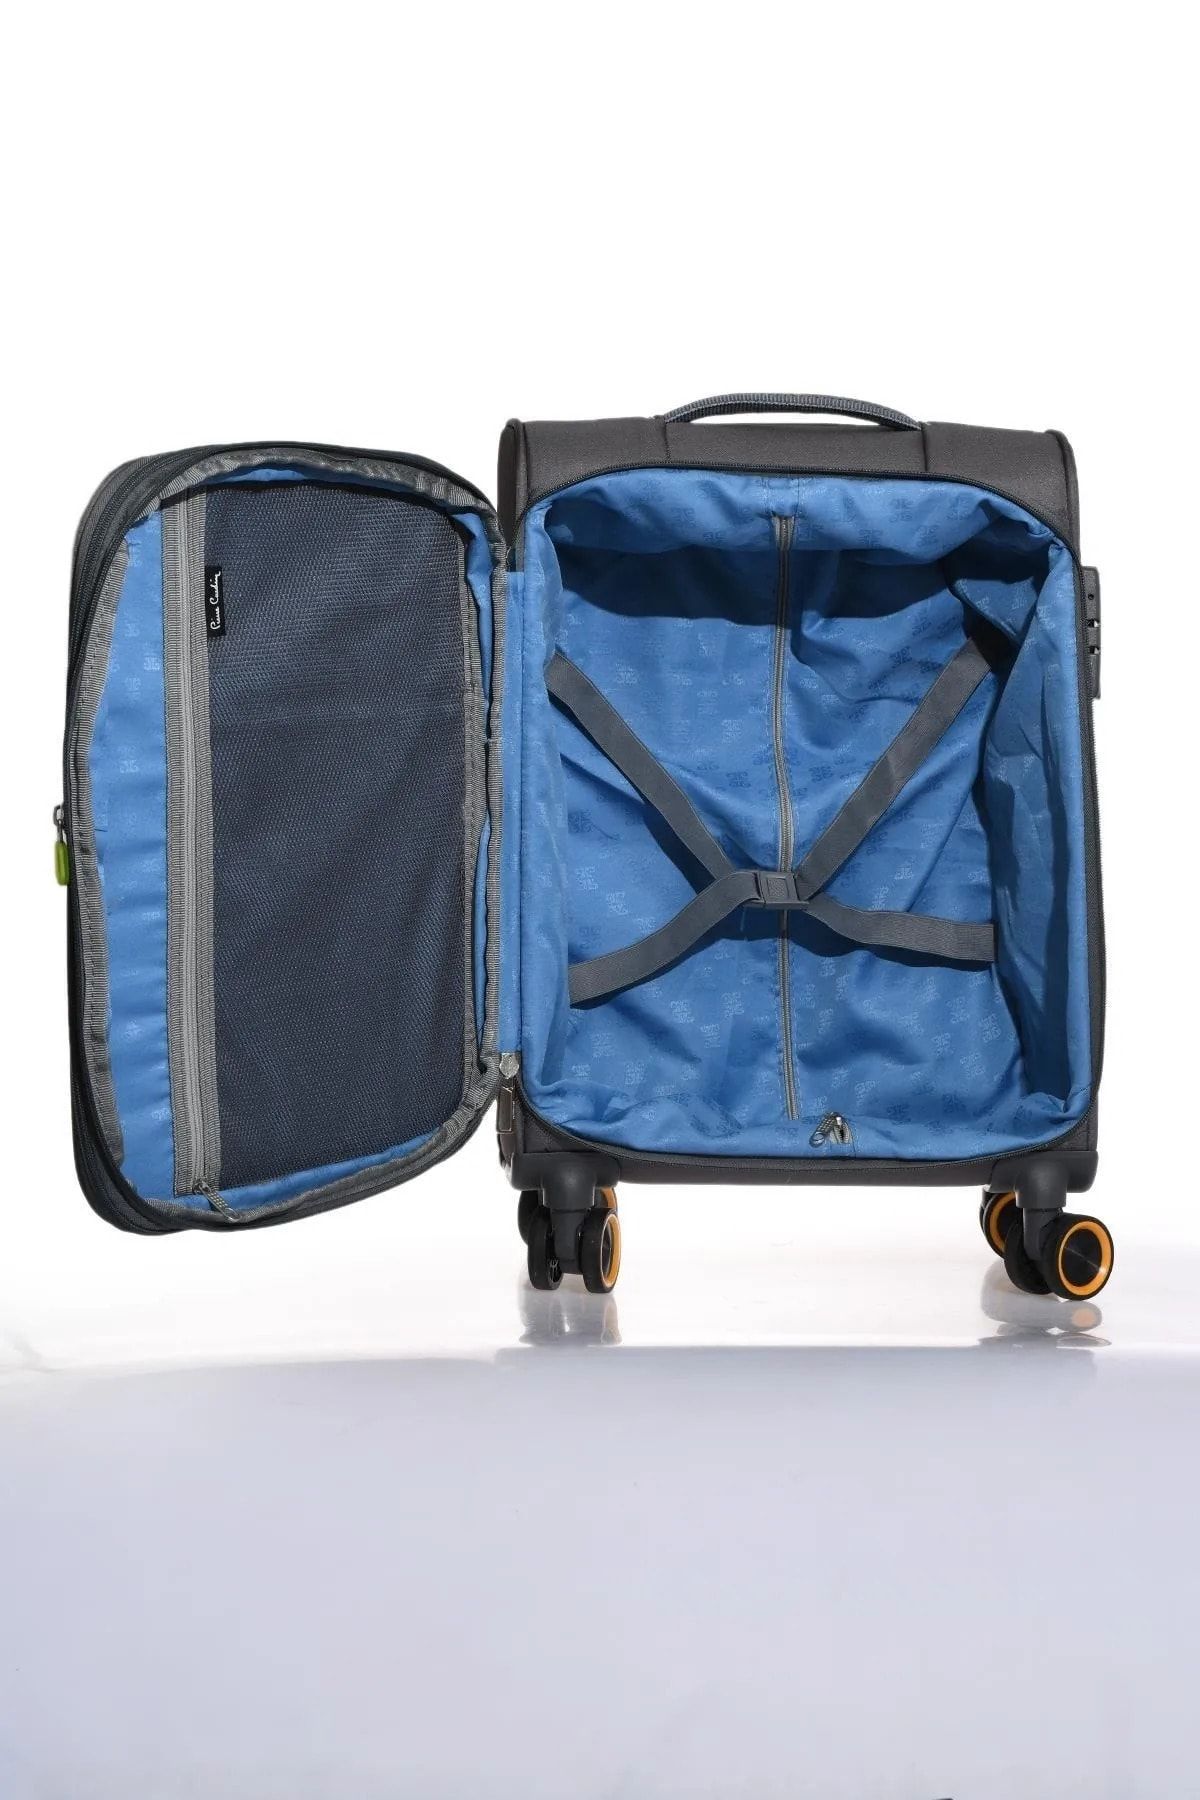 Pierre Cardin چمدان اندازه کابین پارچه ای فوق العاده سبک آنتراسیت